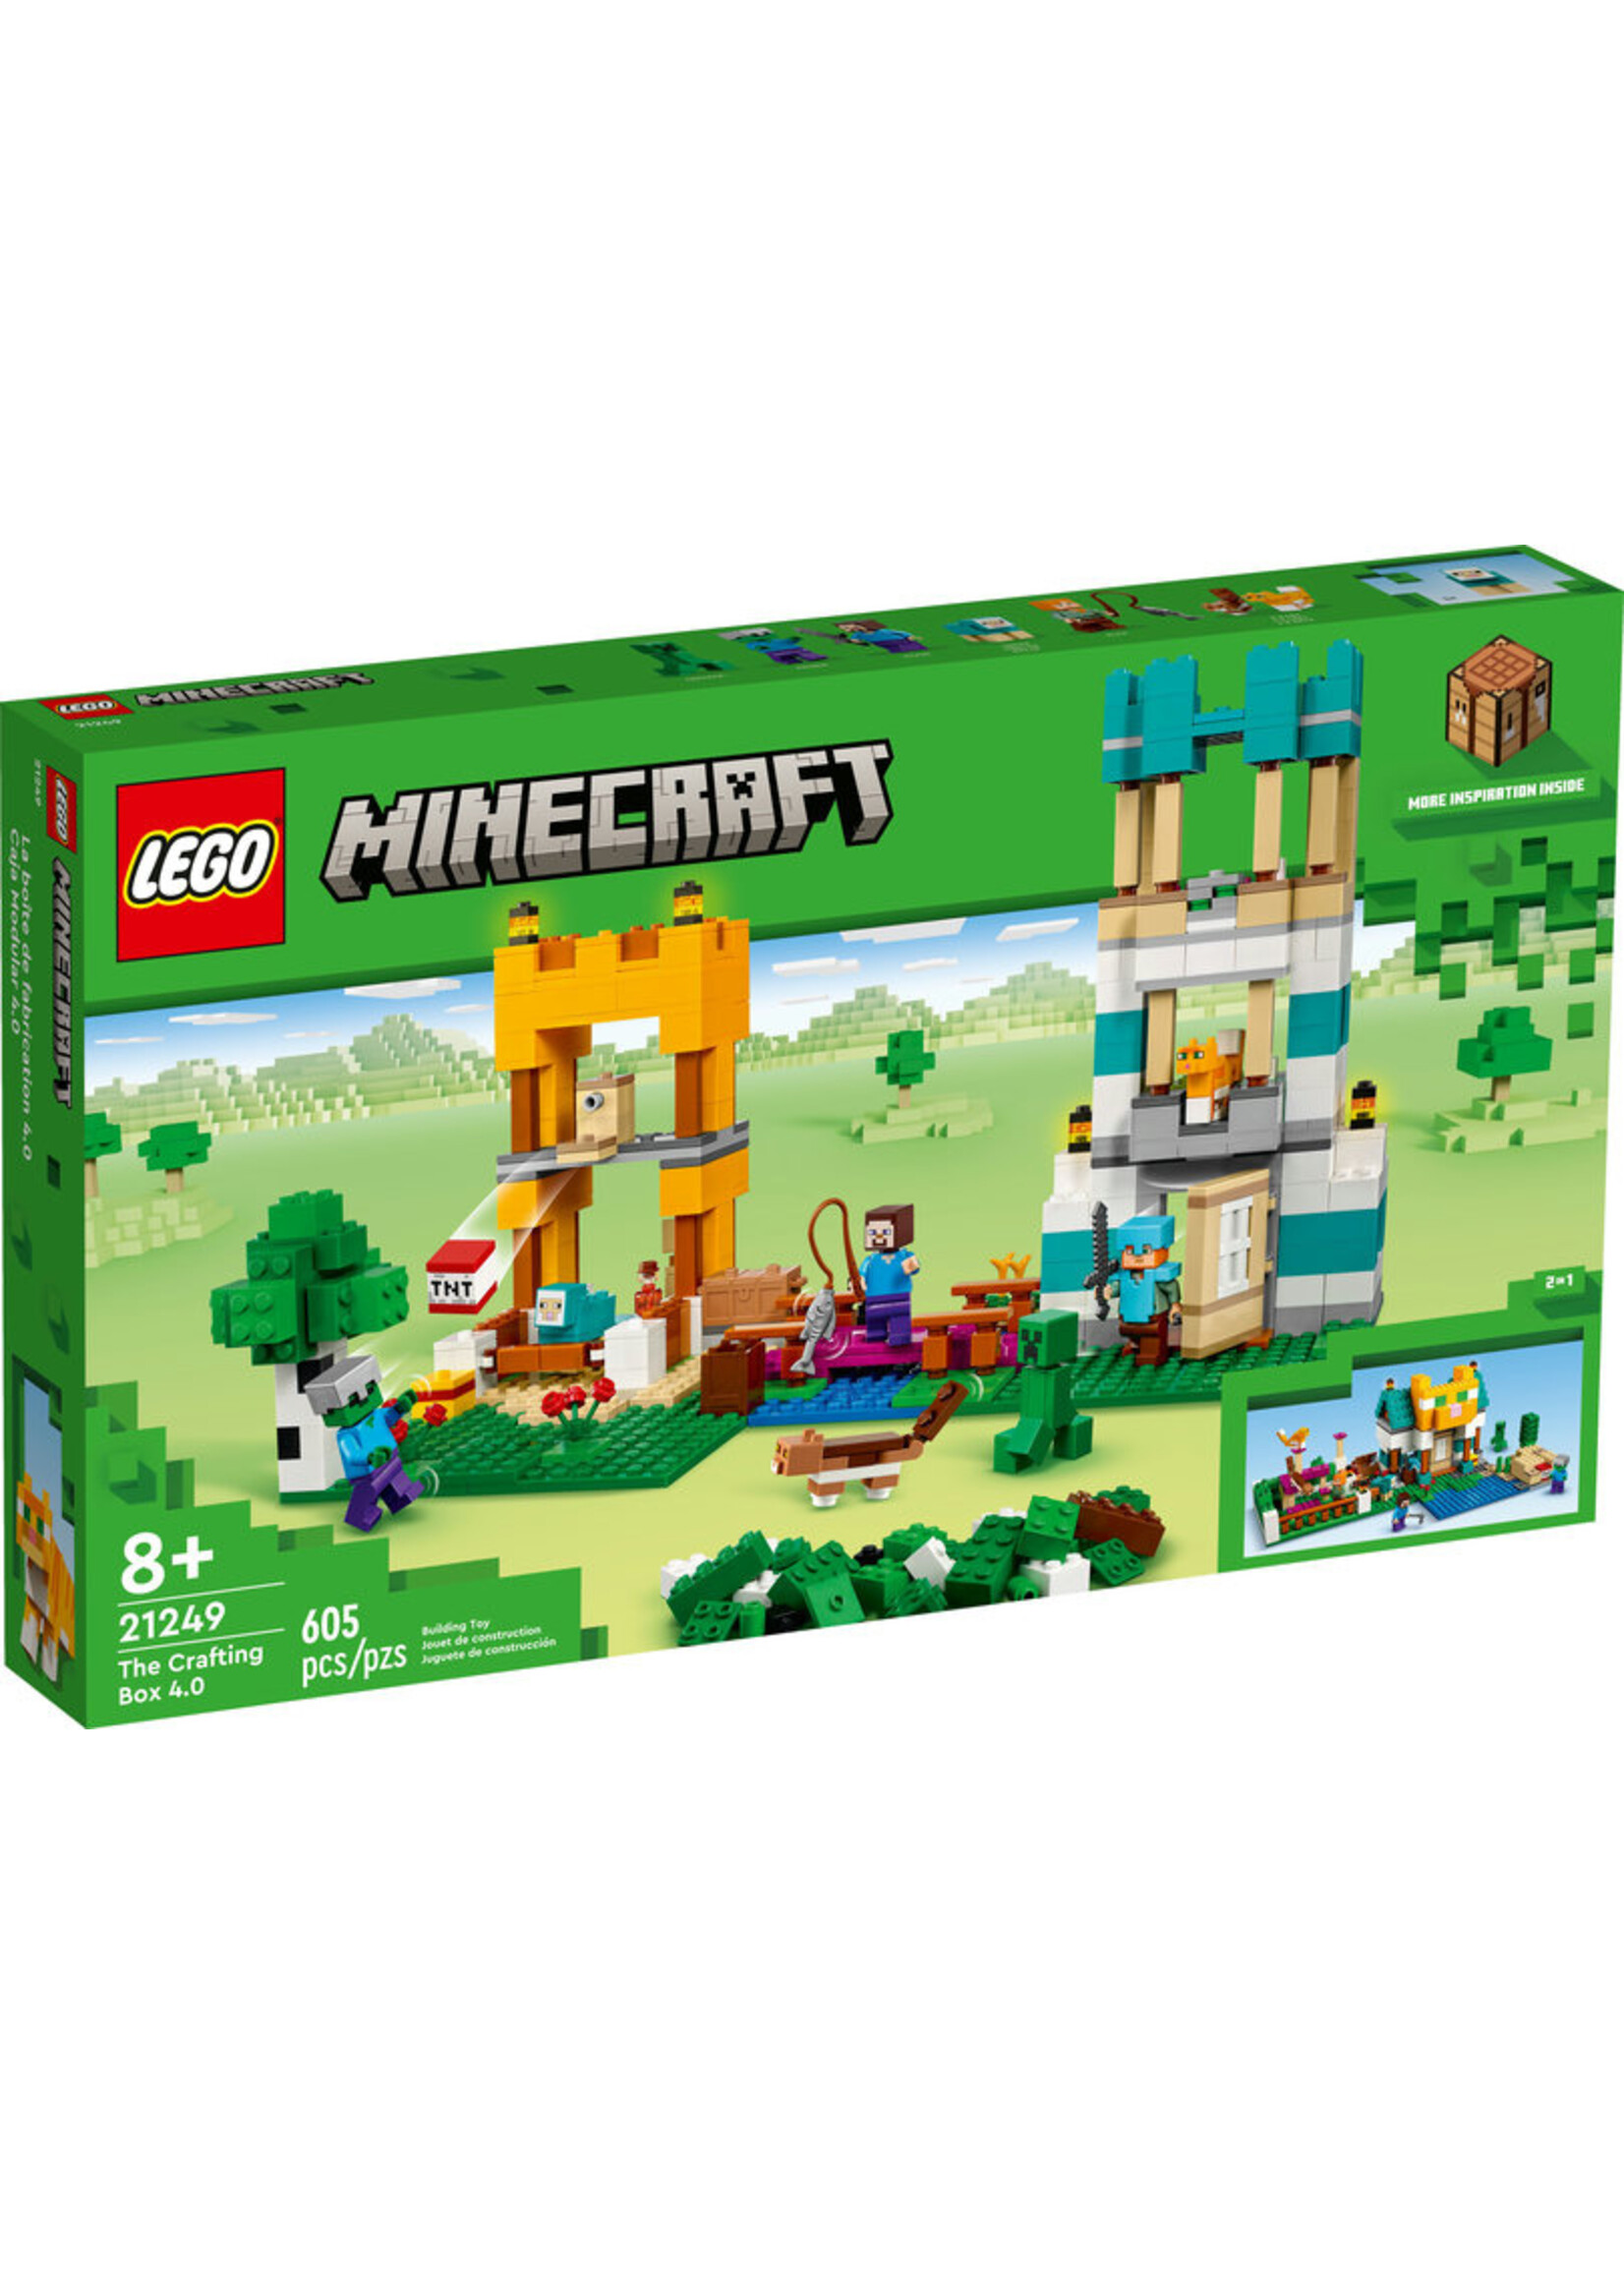 LEGO 21249 - The Crafting Box 4.0